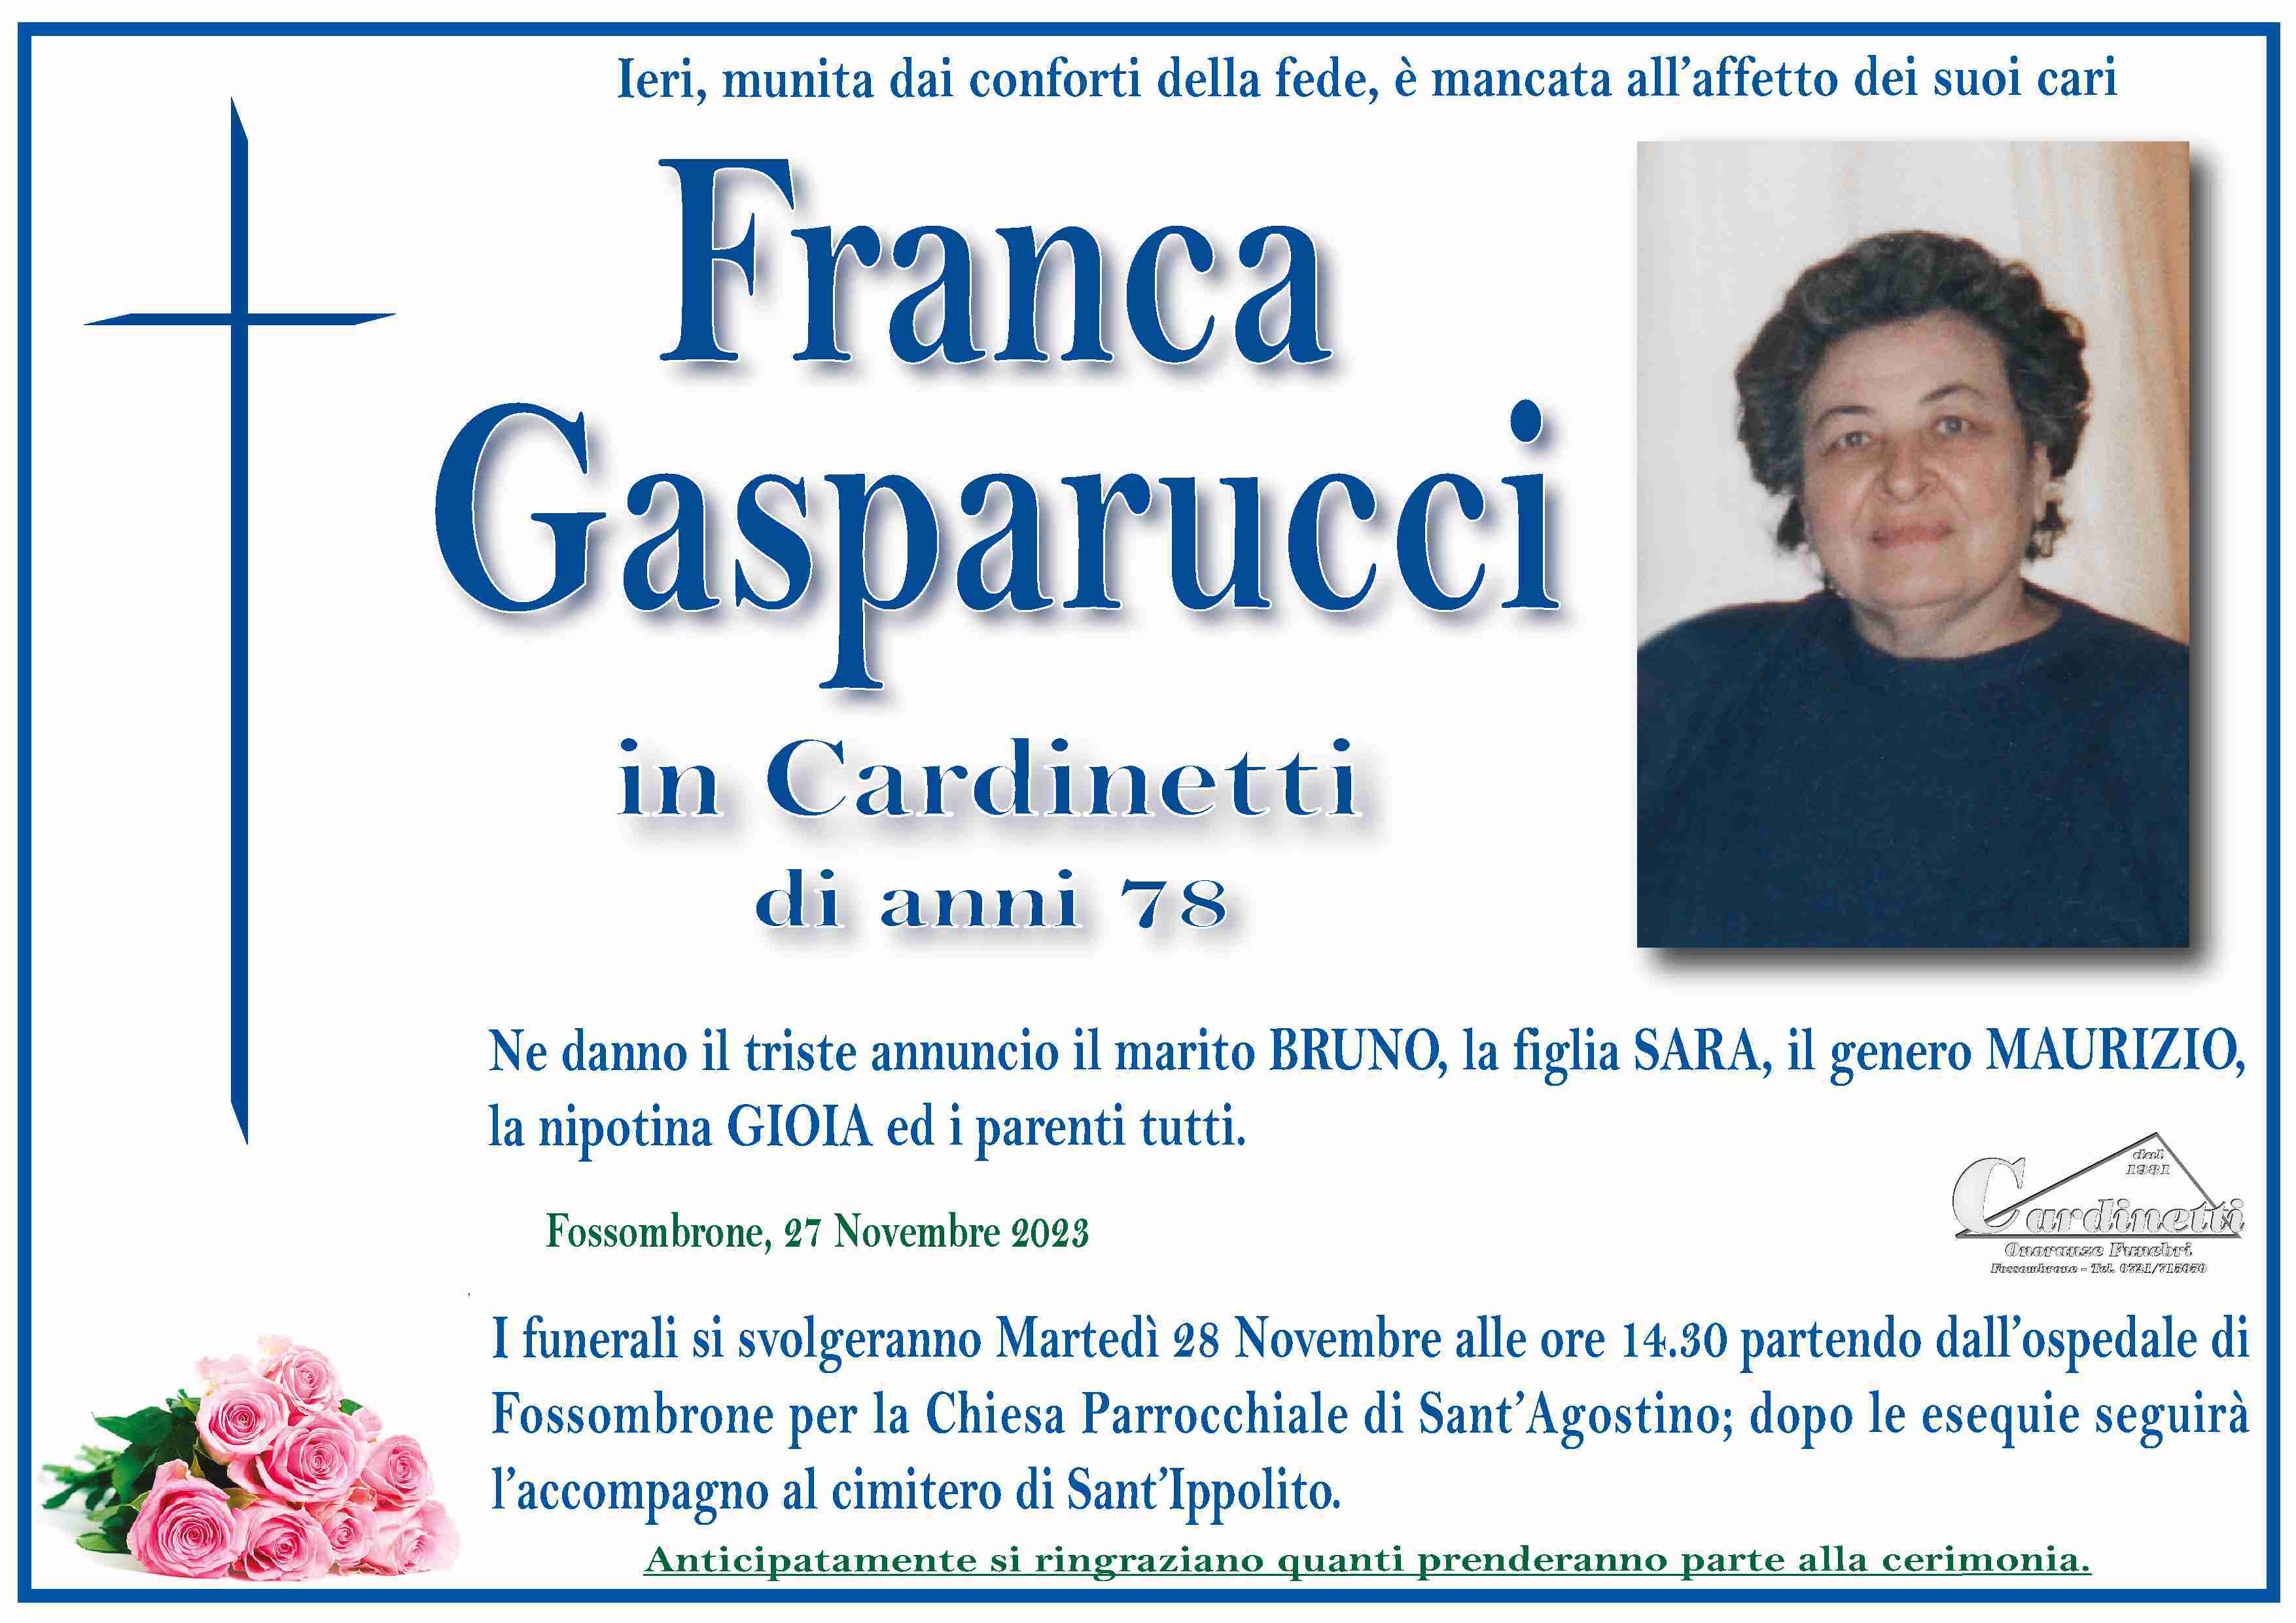 Franca Gasparucci